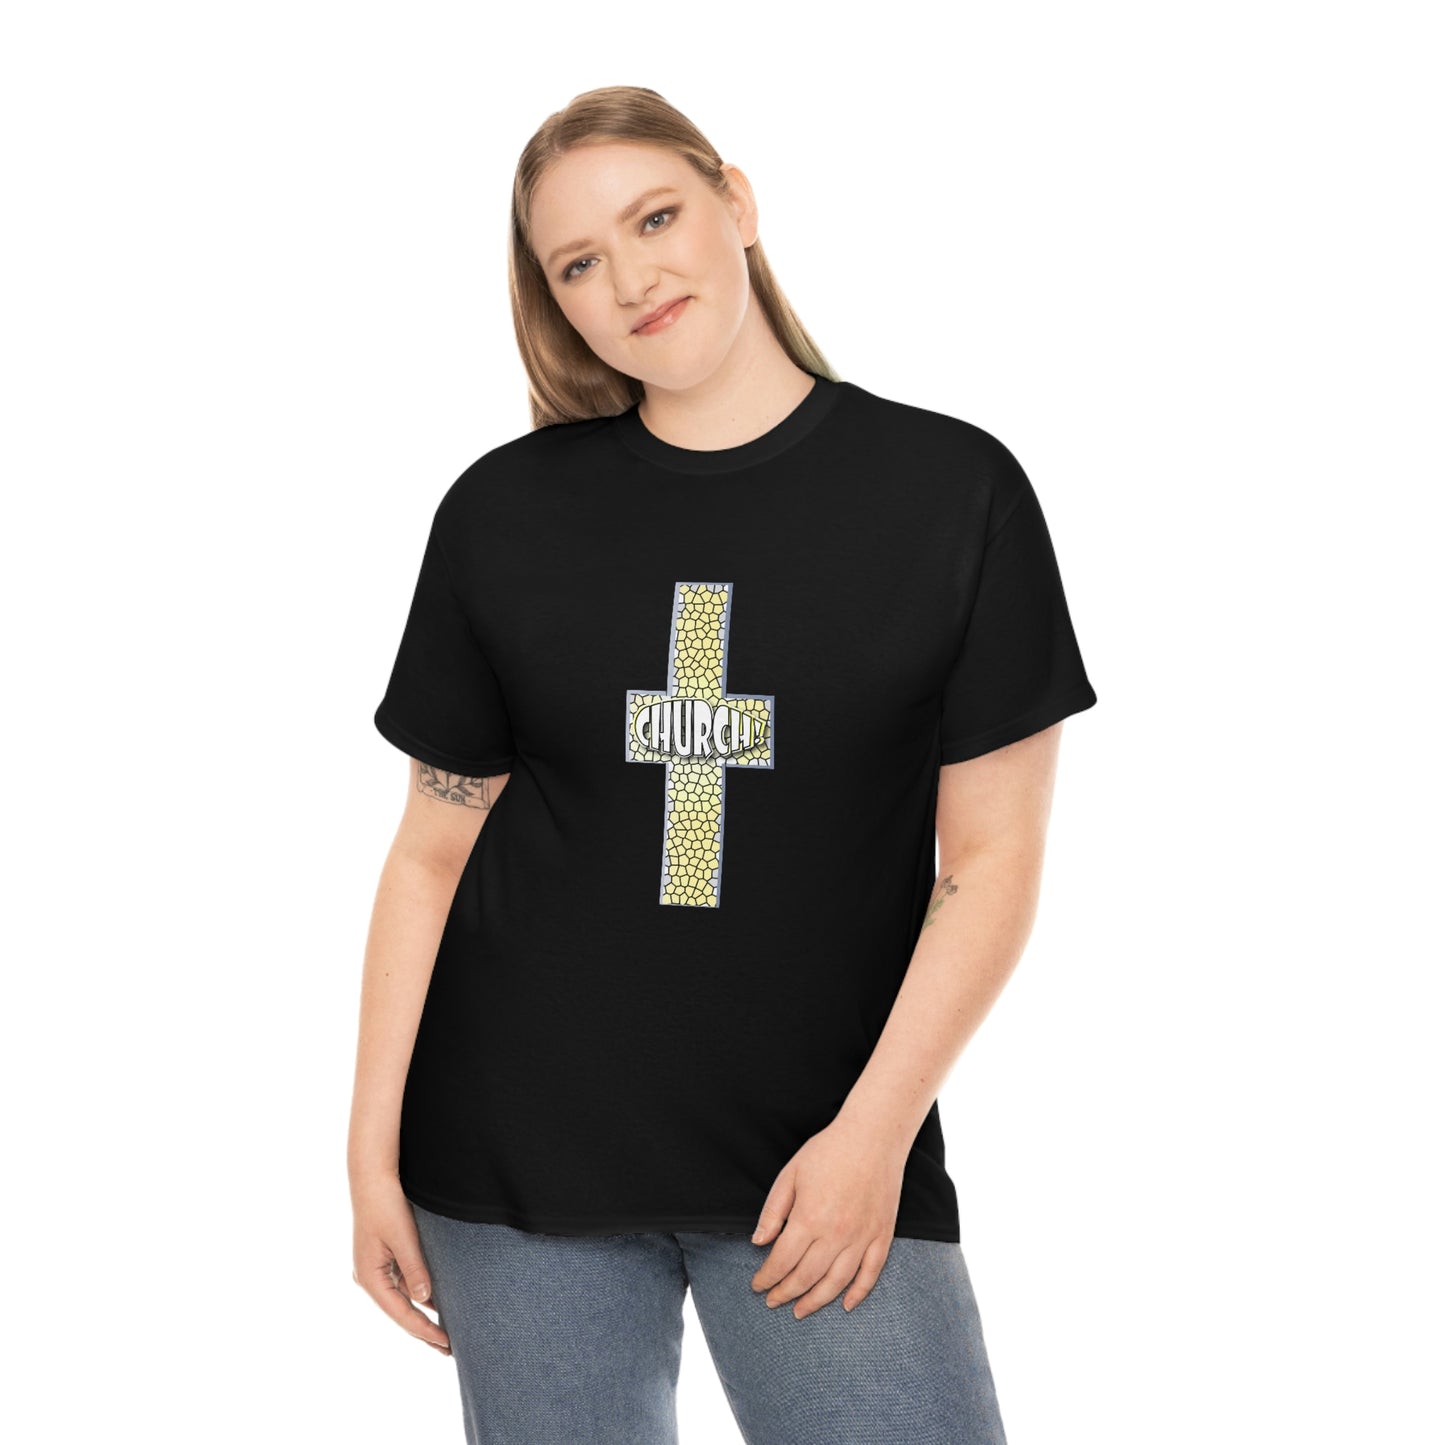 Church[cross] Unisex Heavy Cotton Tee